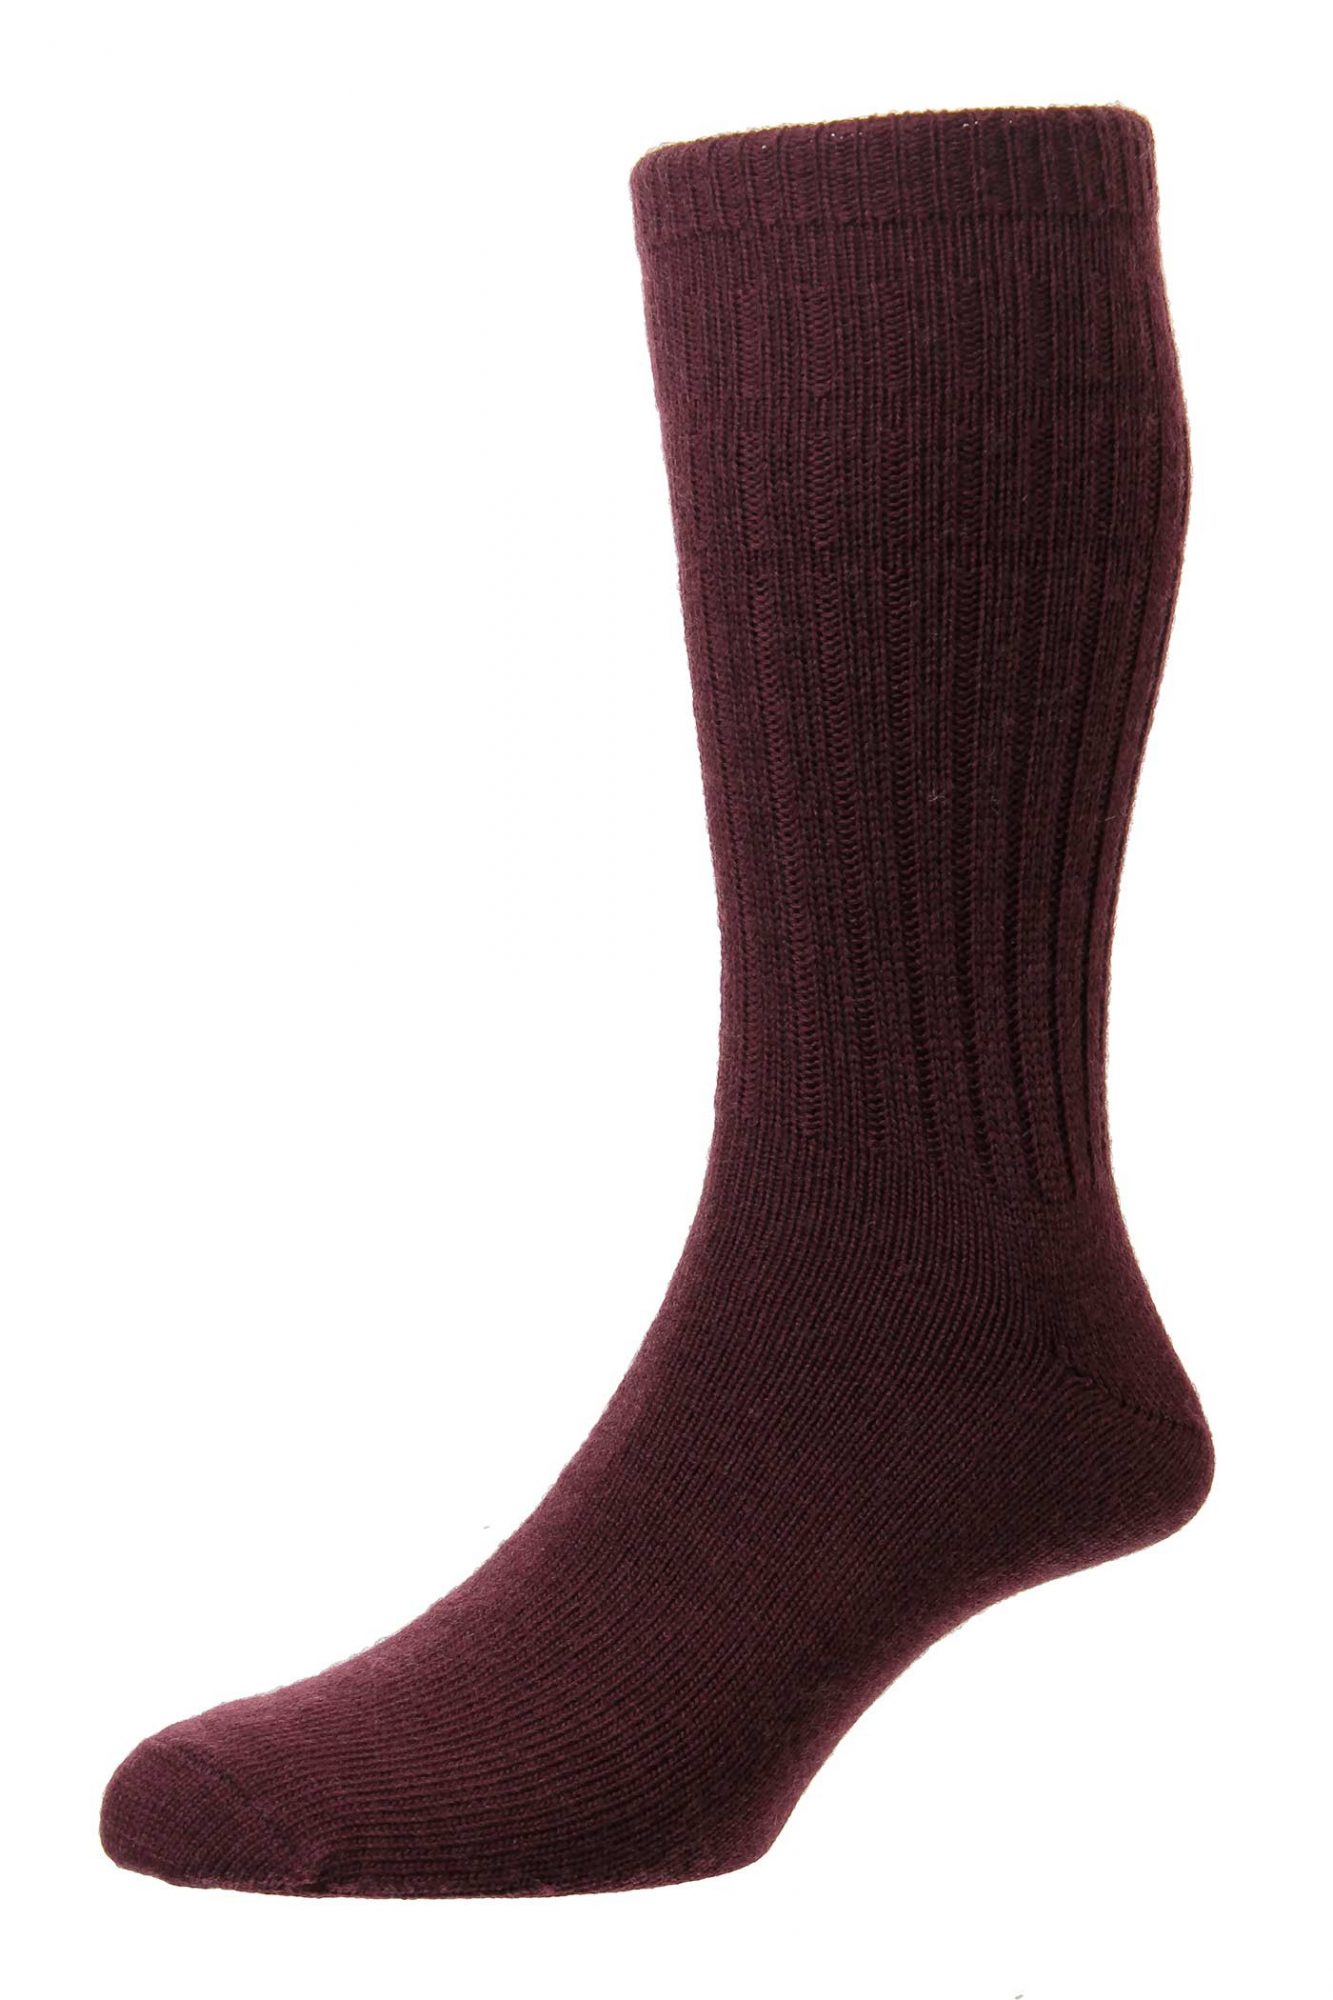 H J Socks SOFT TOP WOOL MIX SOCKS HJ95 - Socks - Barsleys Department Store